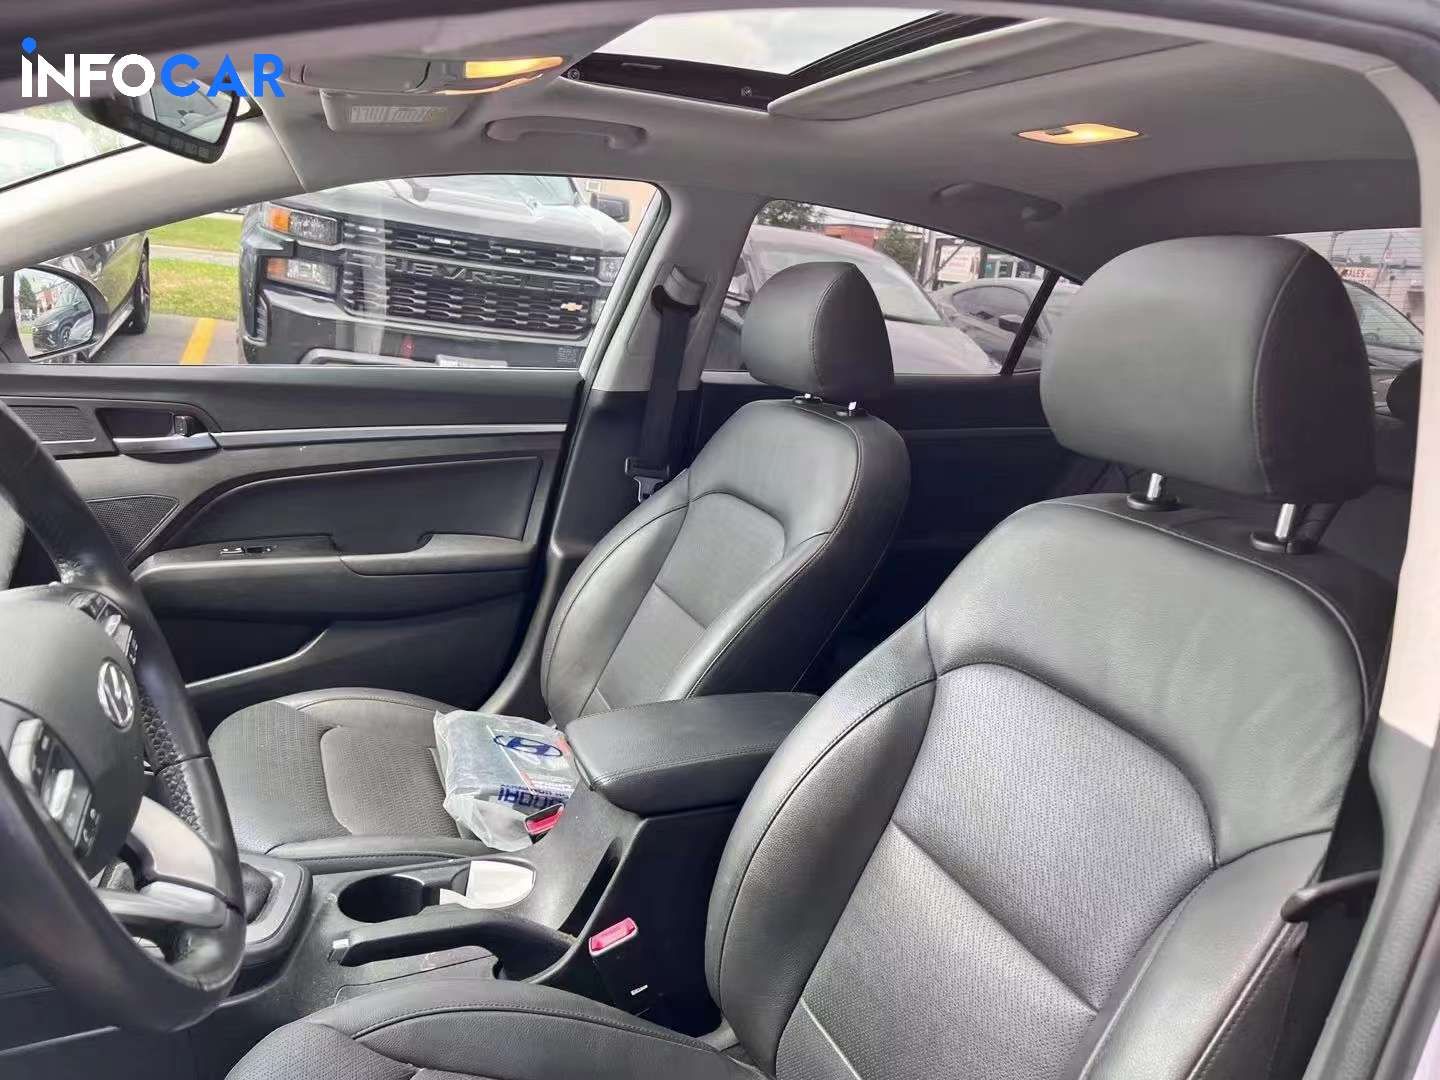 2020 Hyundai Elantra Luxury - INFOCAR - Toronto Auto Trading Platform